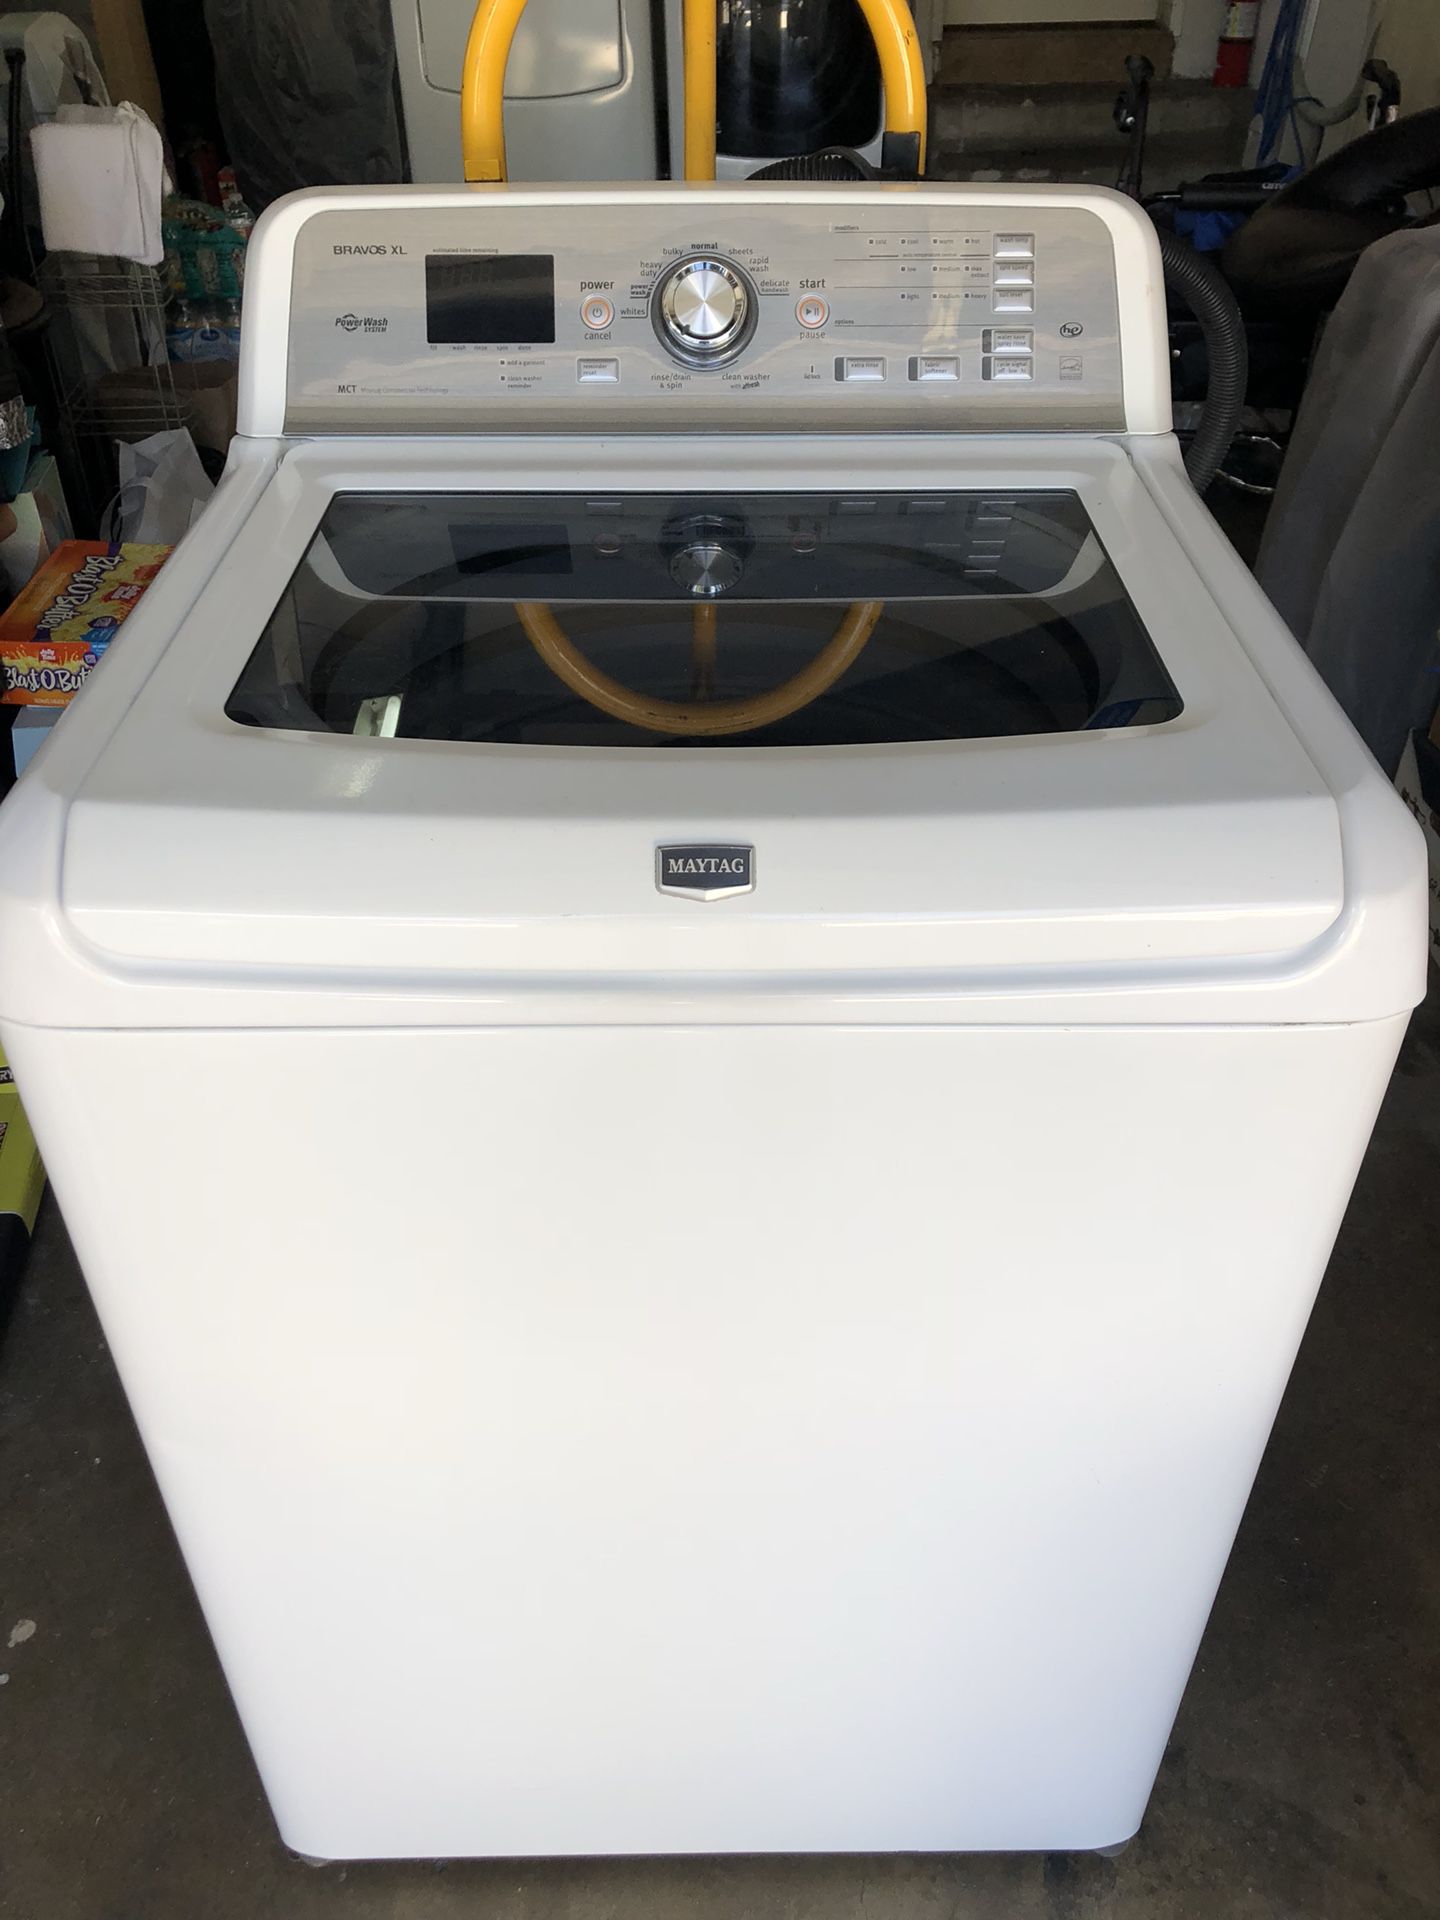 Maytag Bravos XL washing machine 4.5 cu ft everything works but spin dry.